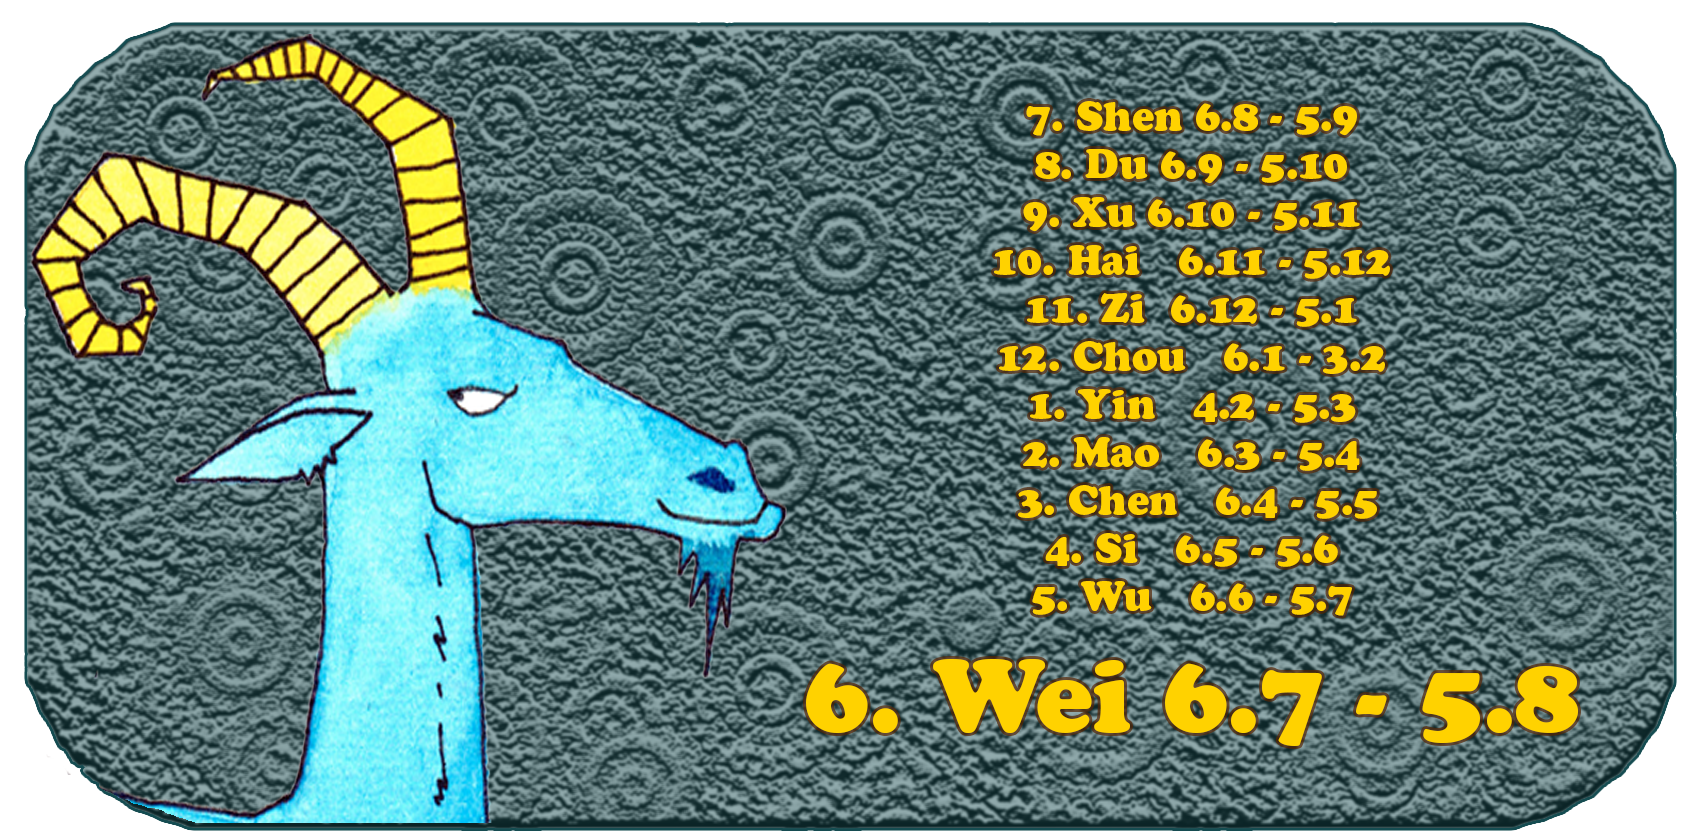 Zodíaco Chinês | Os Doze Animais Chineses | Cabra, Janeiro, Mês 6 Wei